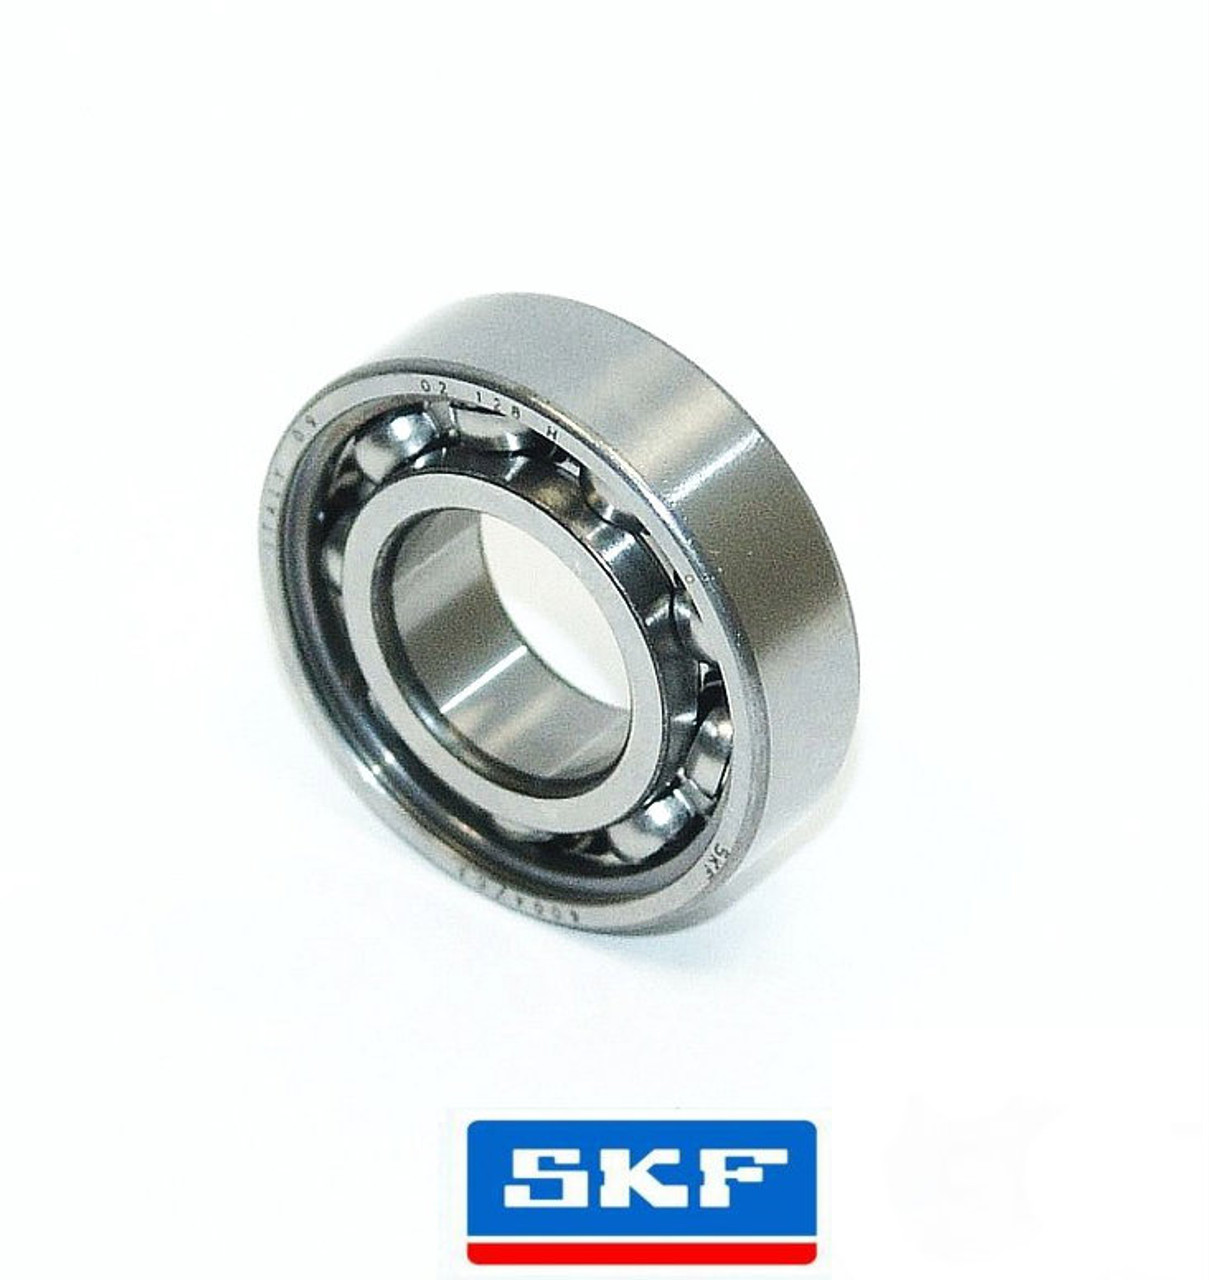 SKF 6004 C3 Crankshaft Bearing